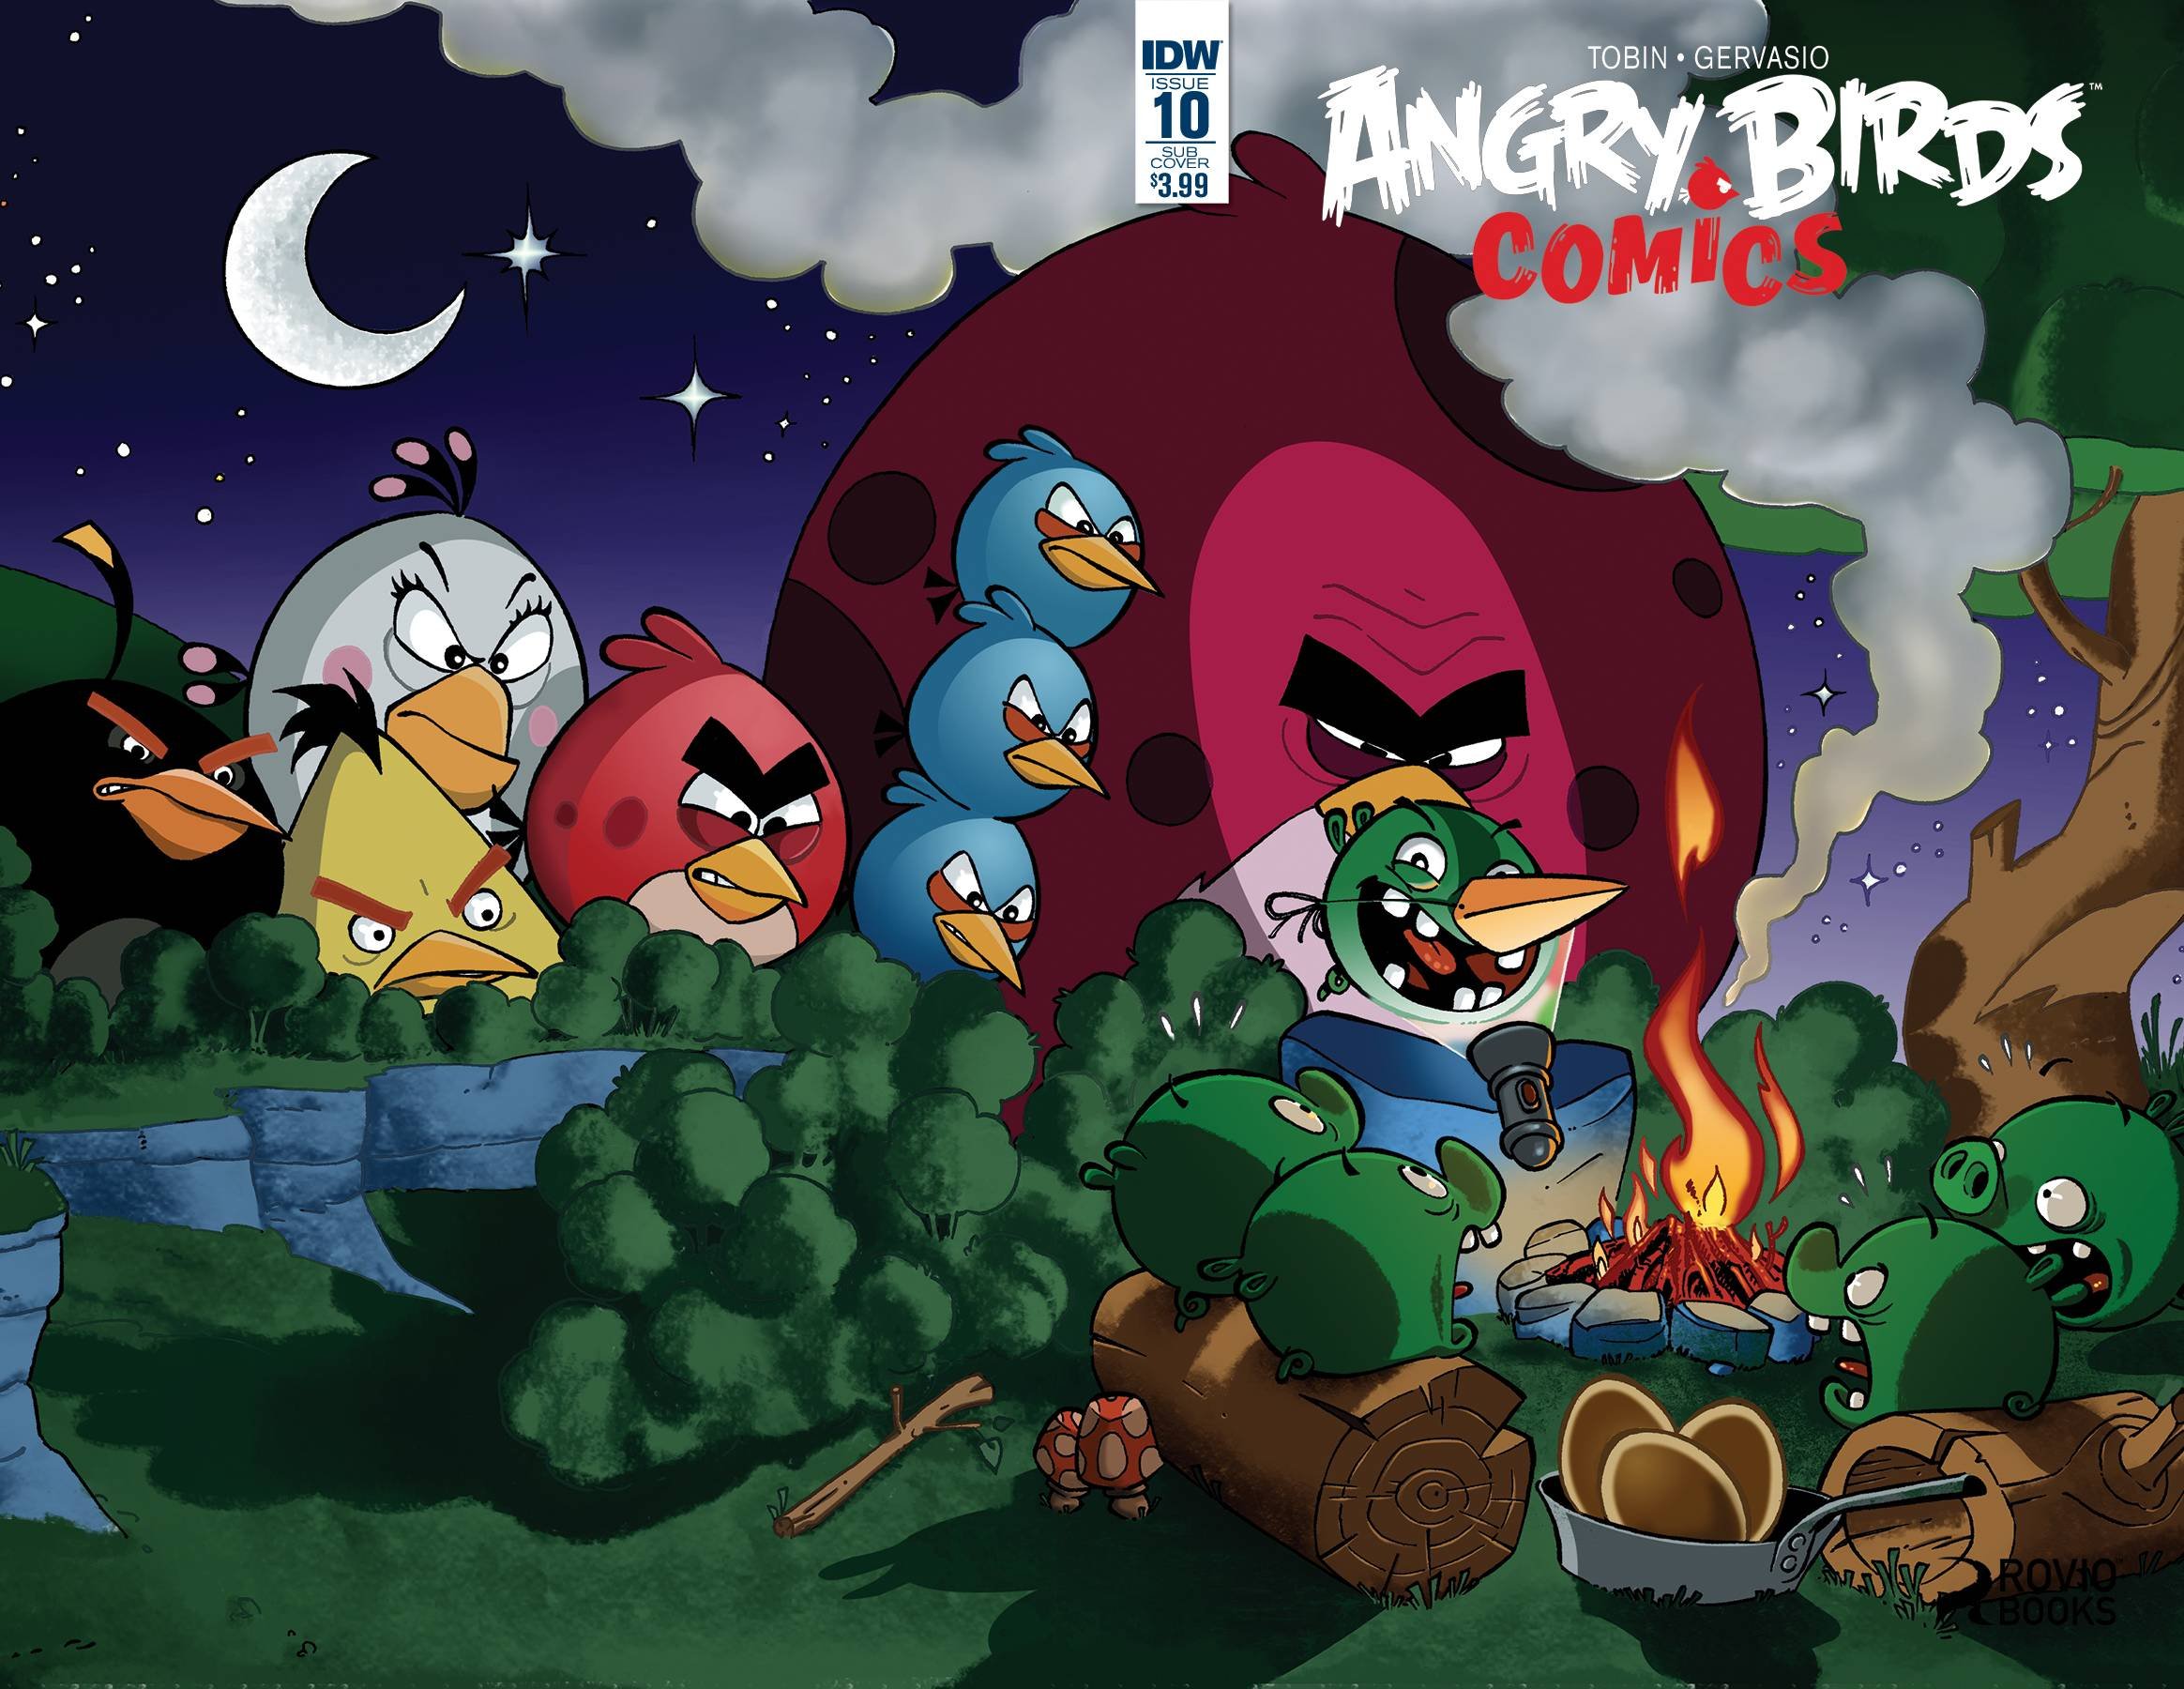 Angry Birds Comics Vol.2 010 (October 2016) (subscriber cover)